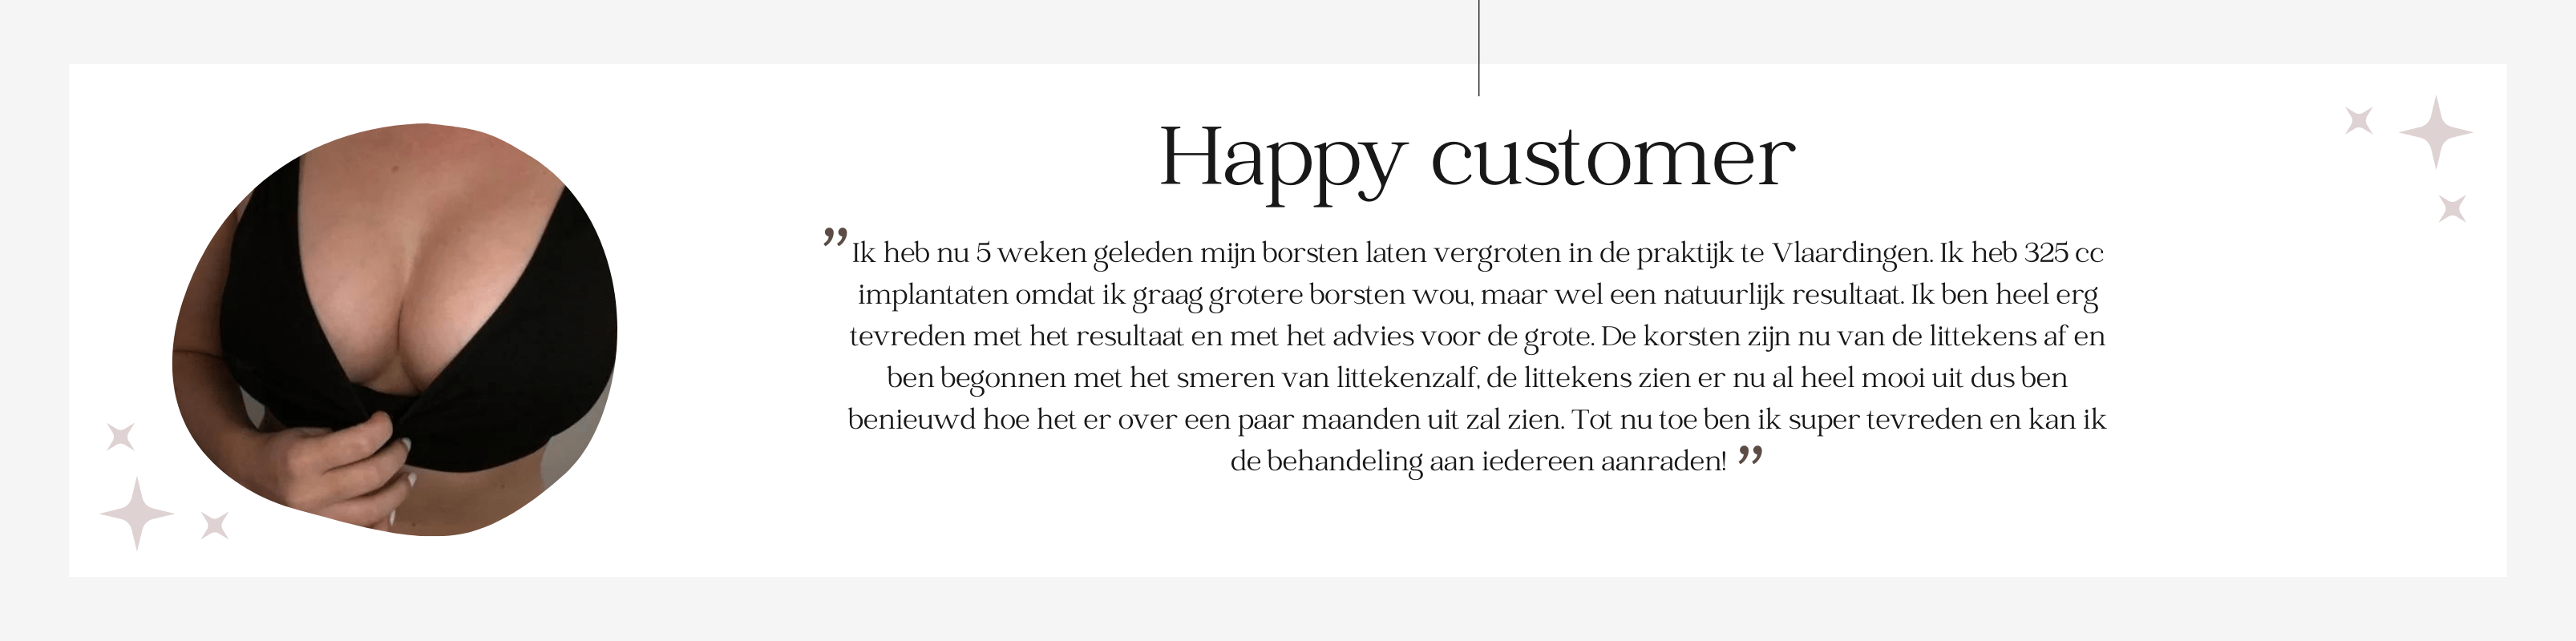 Happy customers borsten 2